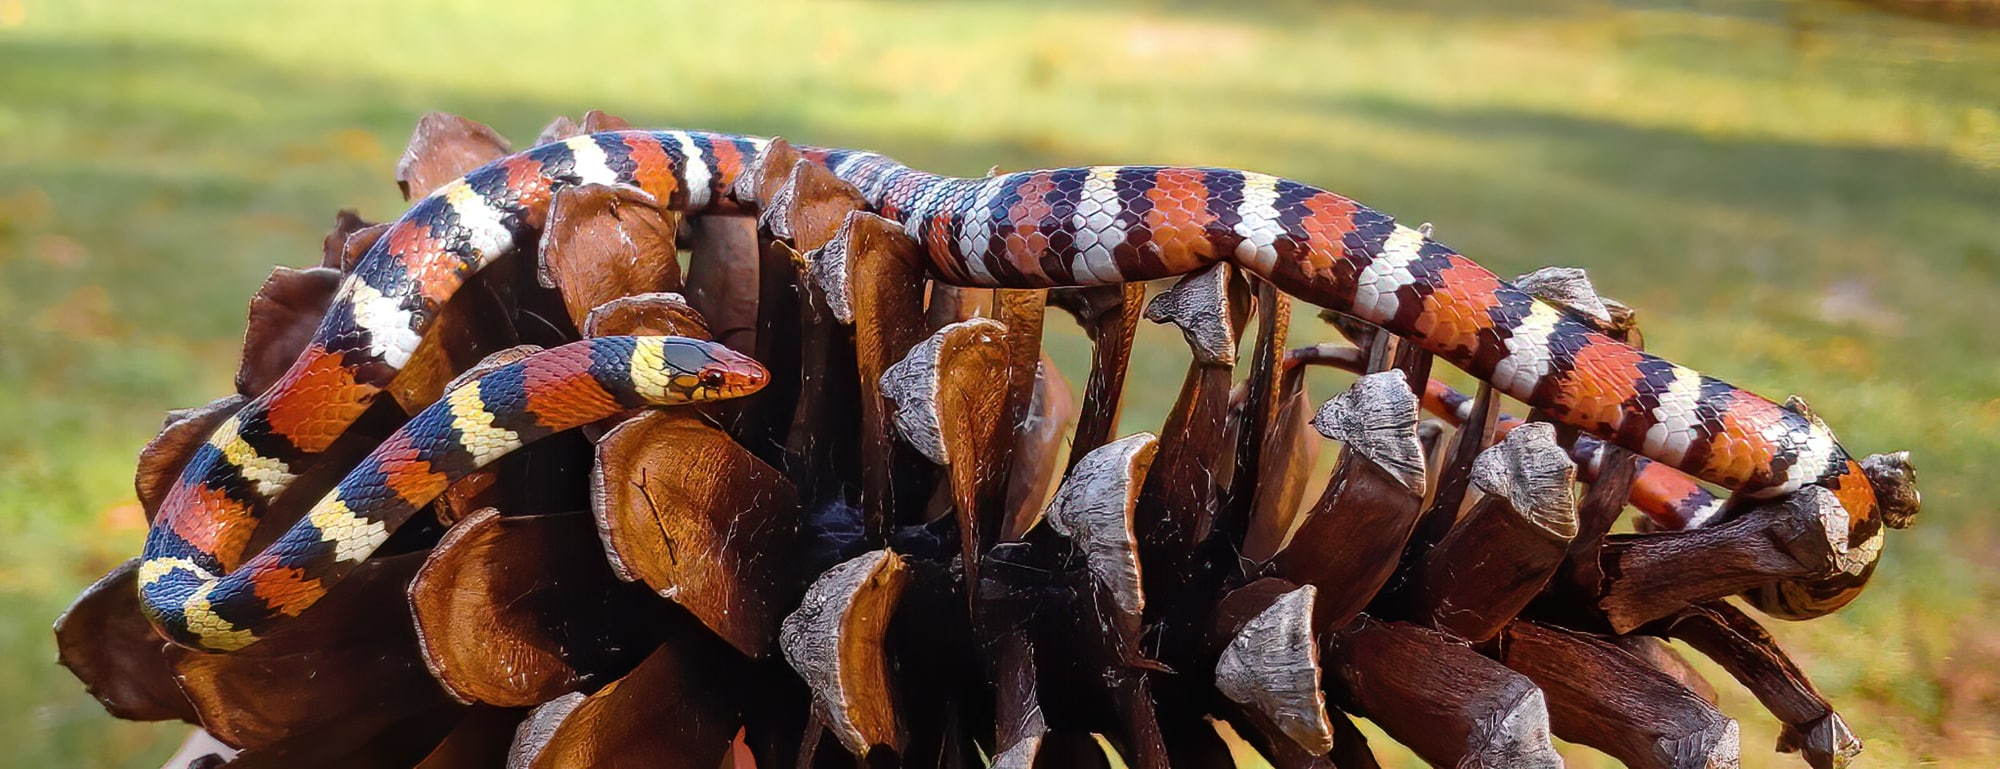 wild juvenile scarlet king snake posed on a long leaf pine tree pinecone